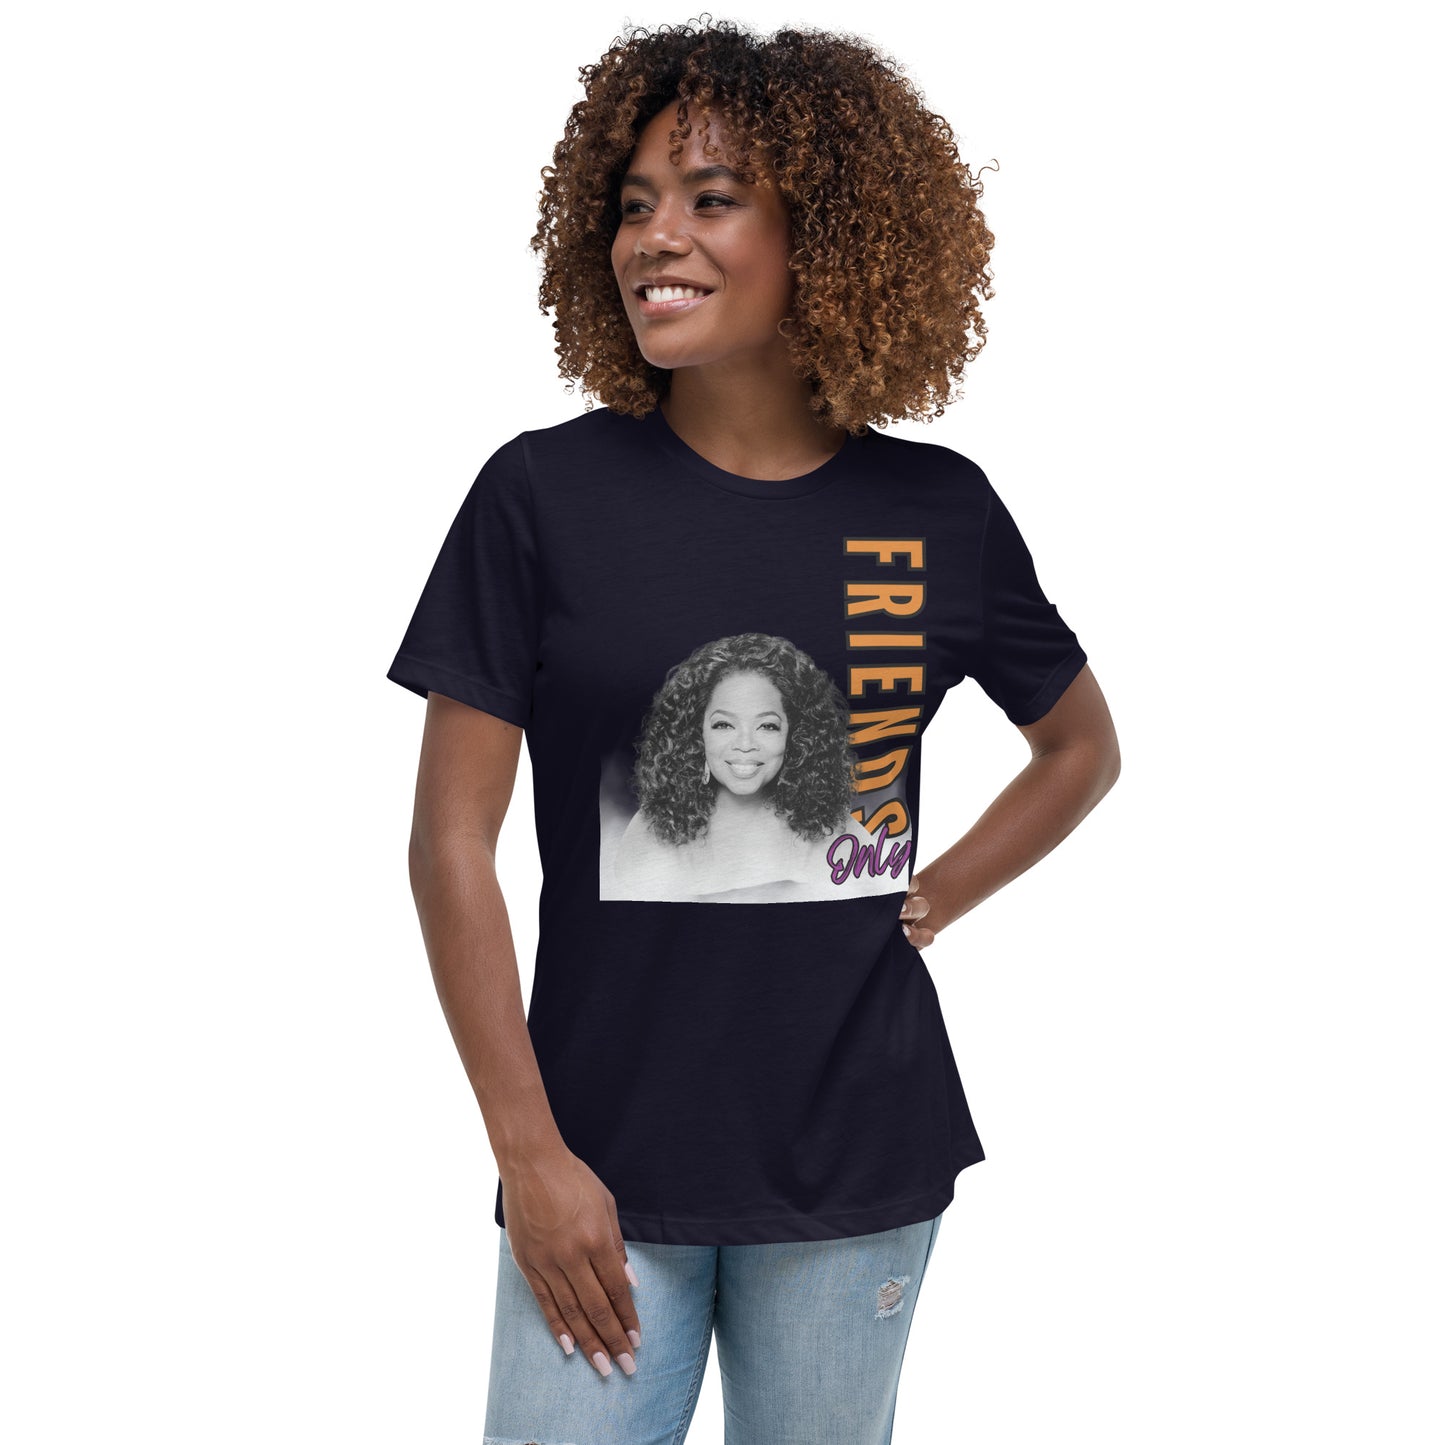 Our Friend Oprah T-Shirt